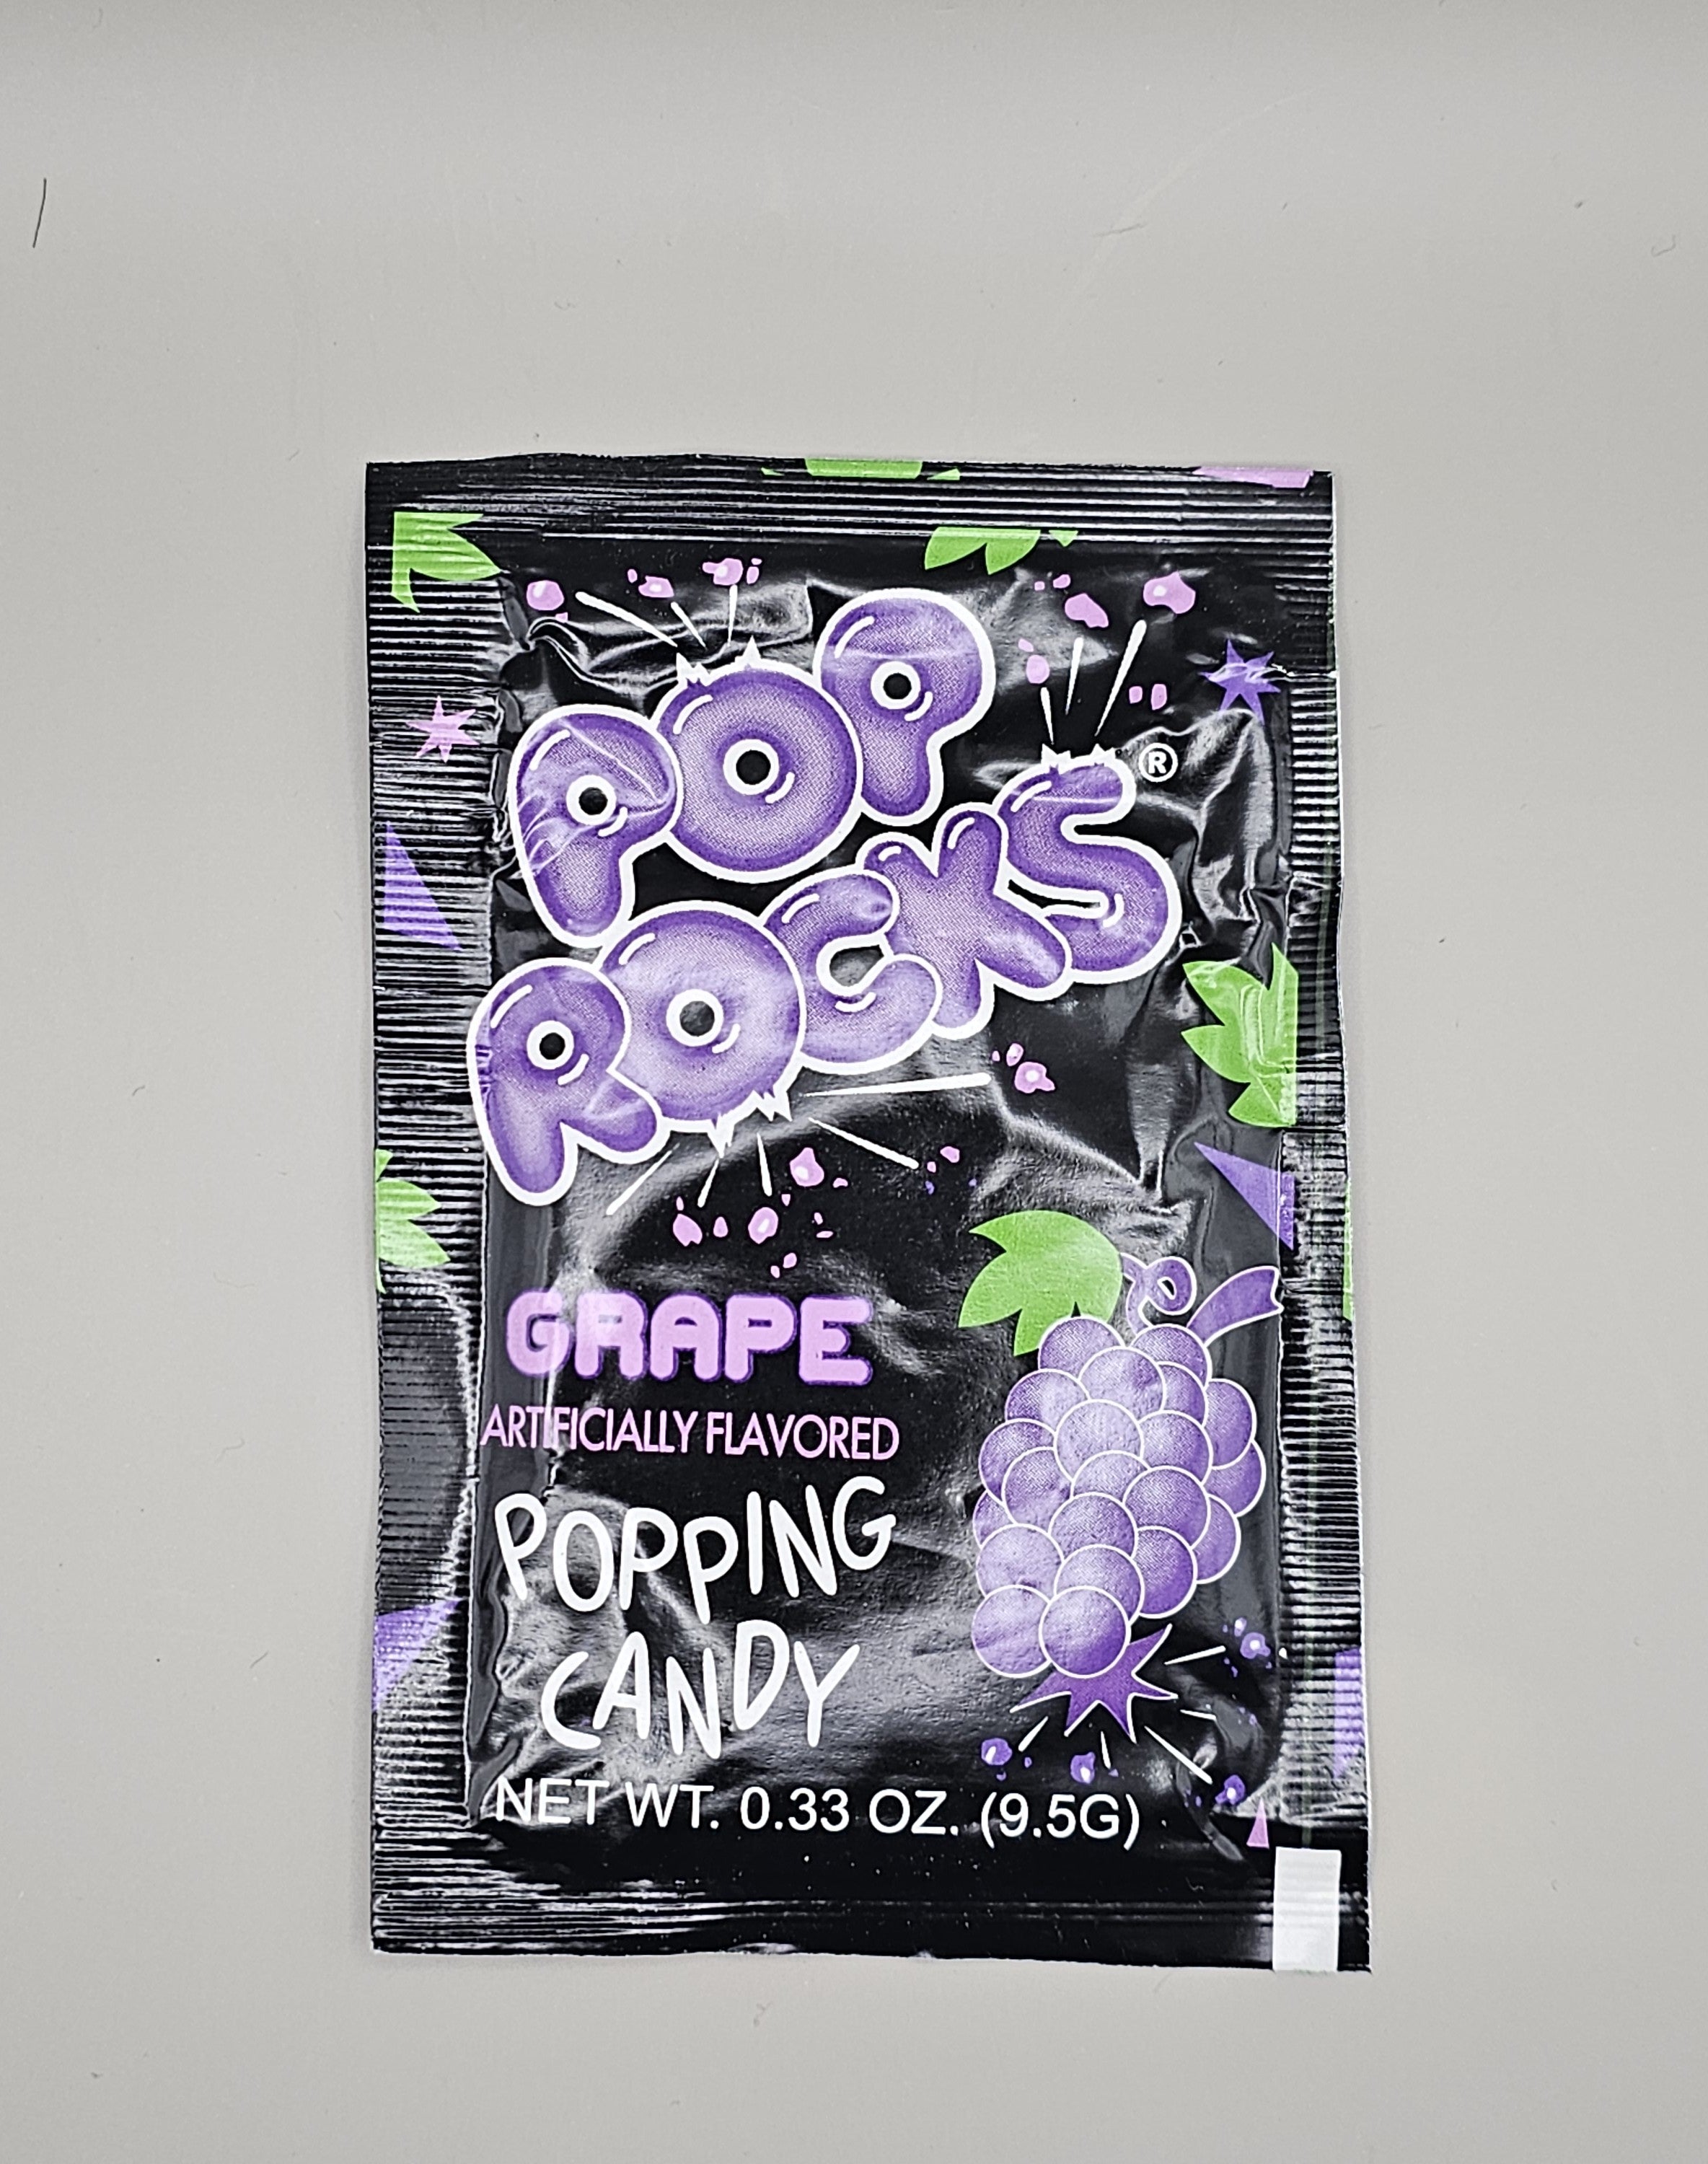 Grape pop rocks.